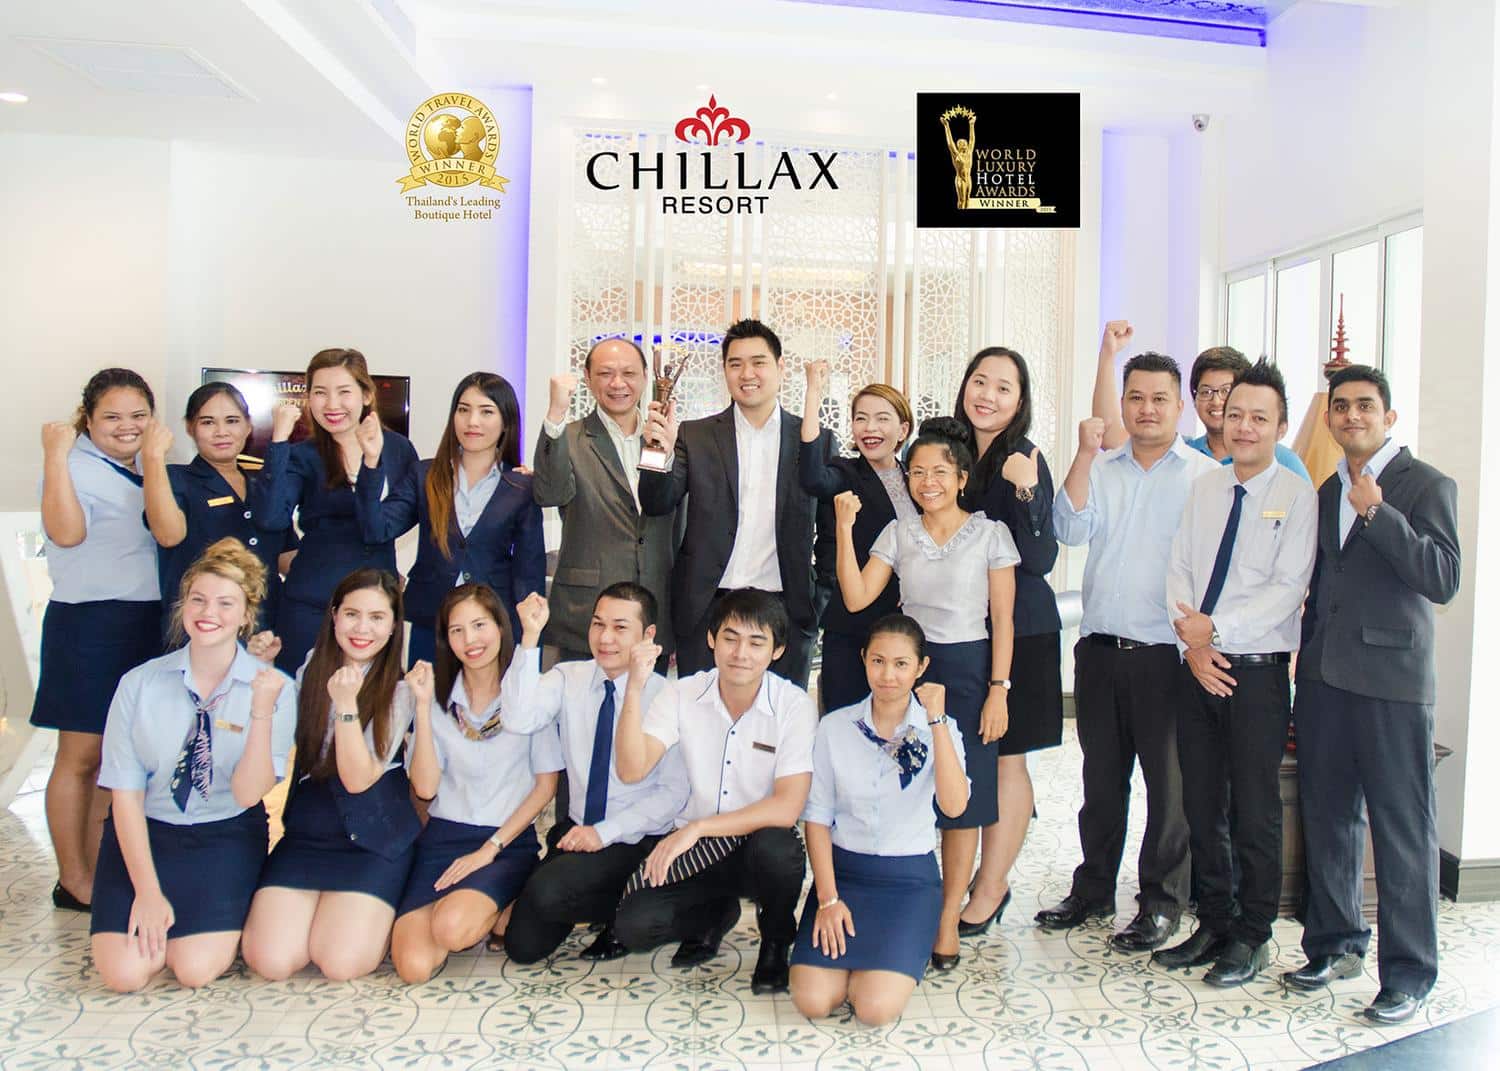 World class Hotel awards winner 2015